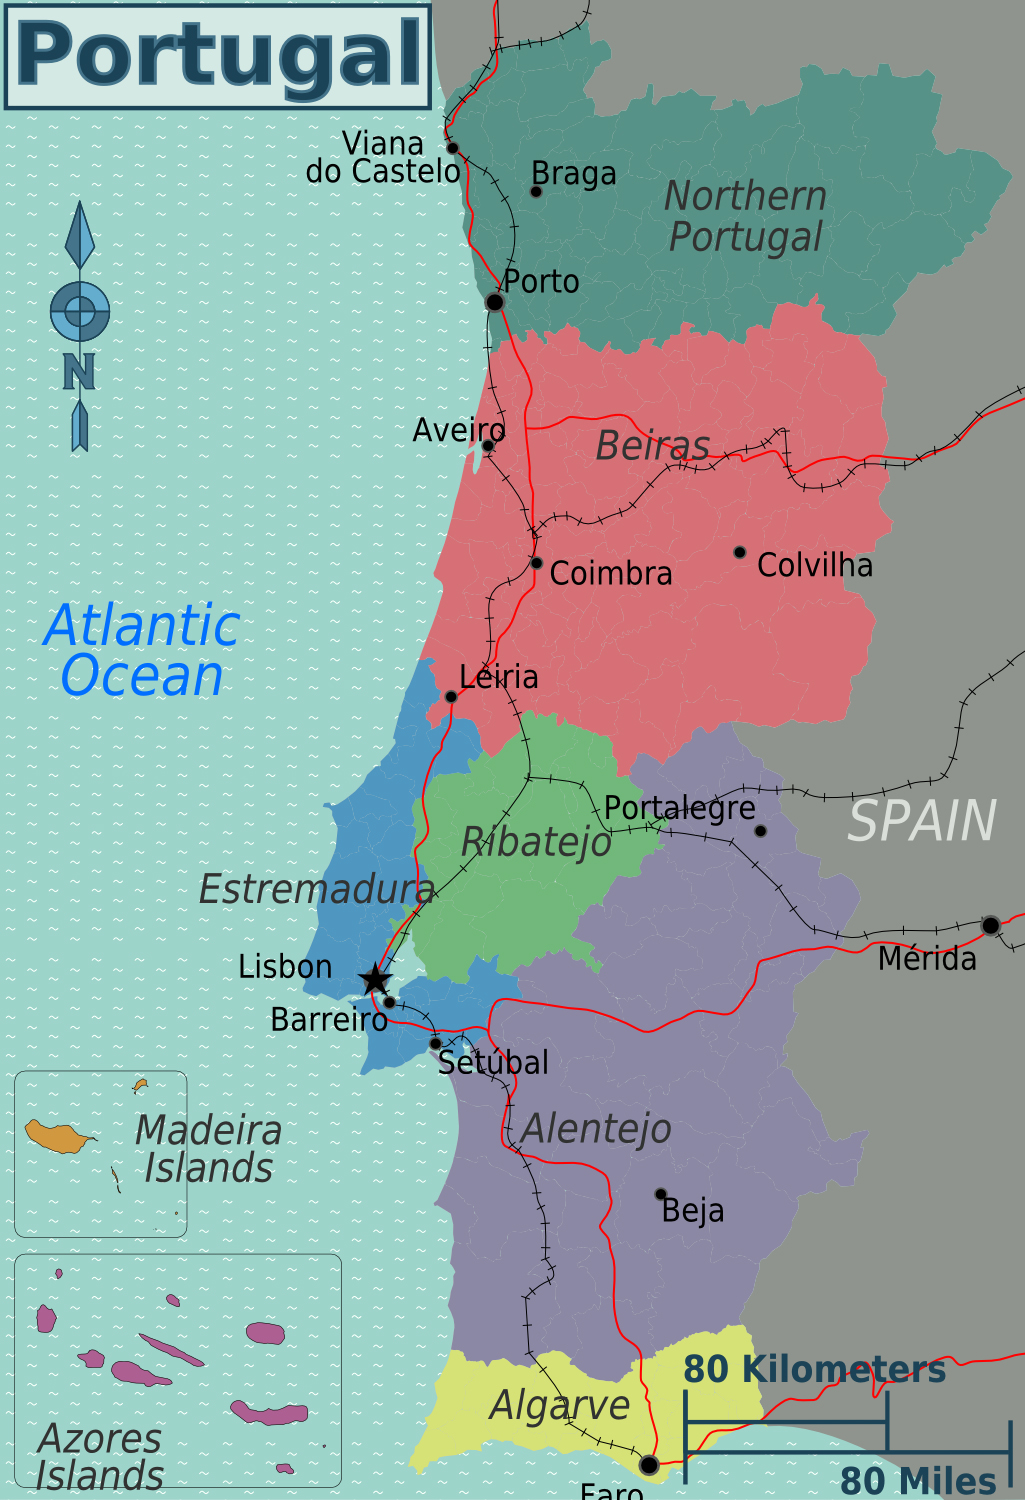 Map Portugal algarve region - Map of algarve region of Portugal